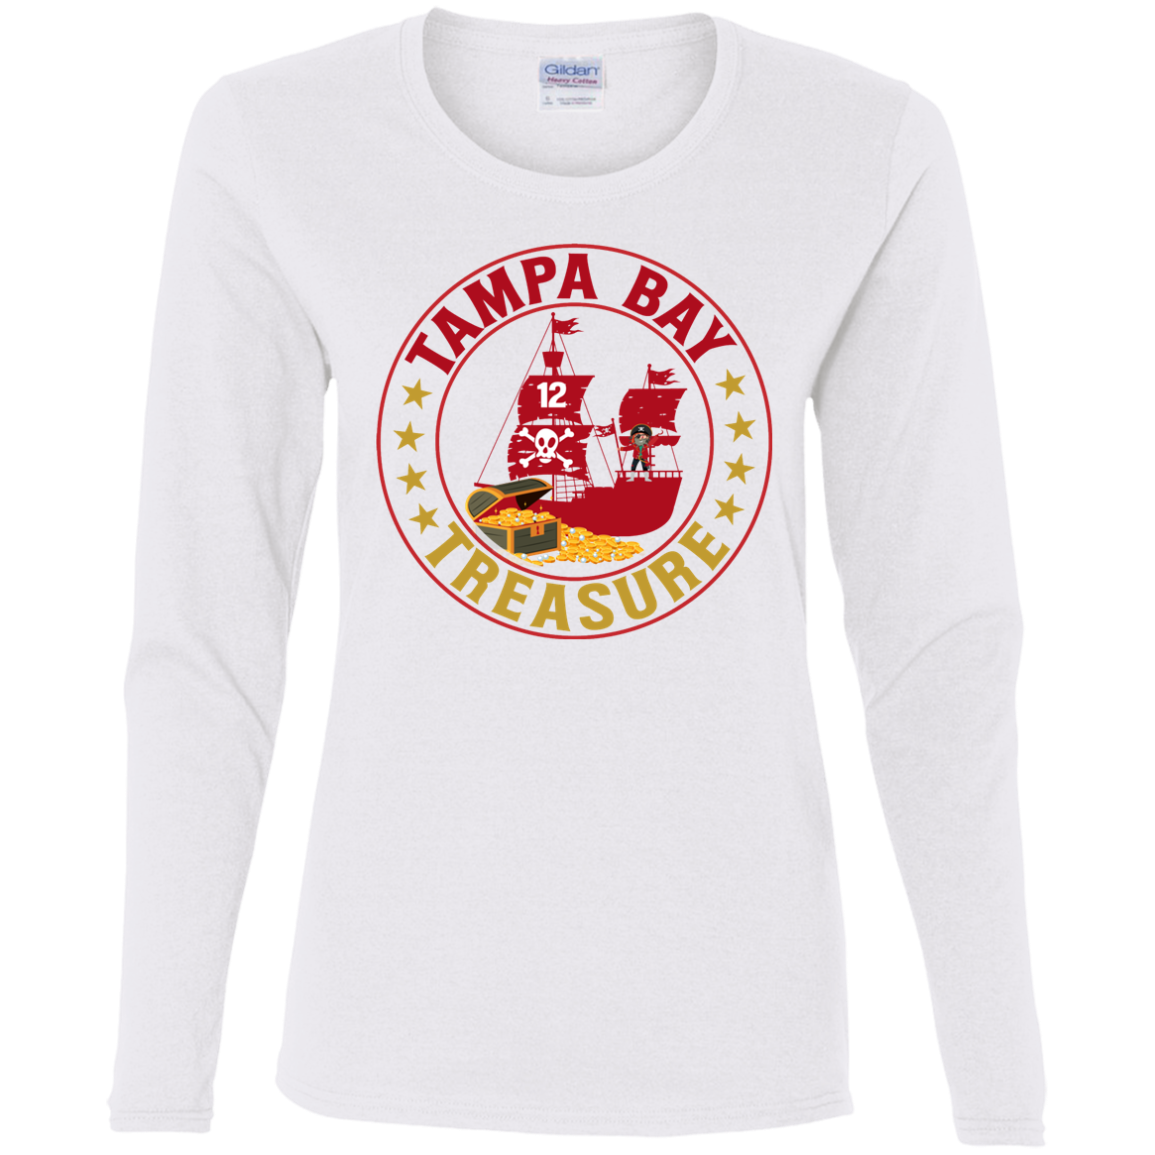 Tampa Bay Treasure Ladies' Cotton T-Shirt